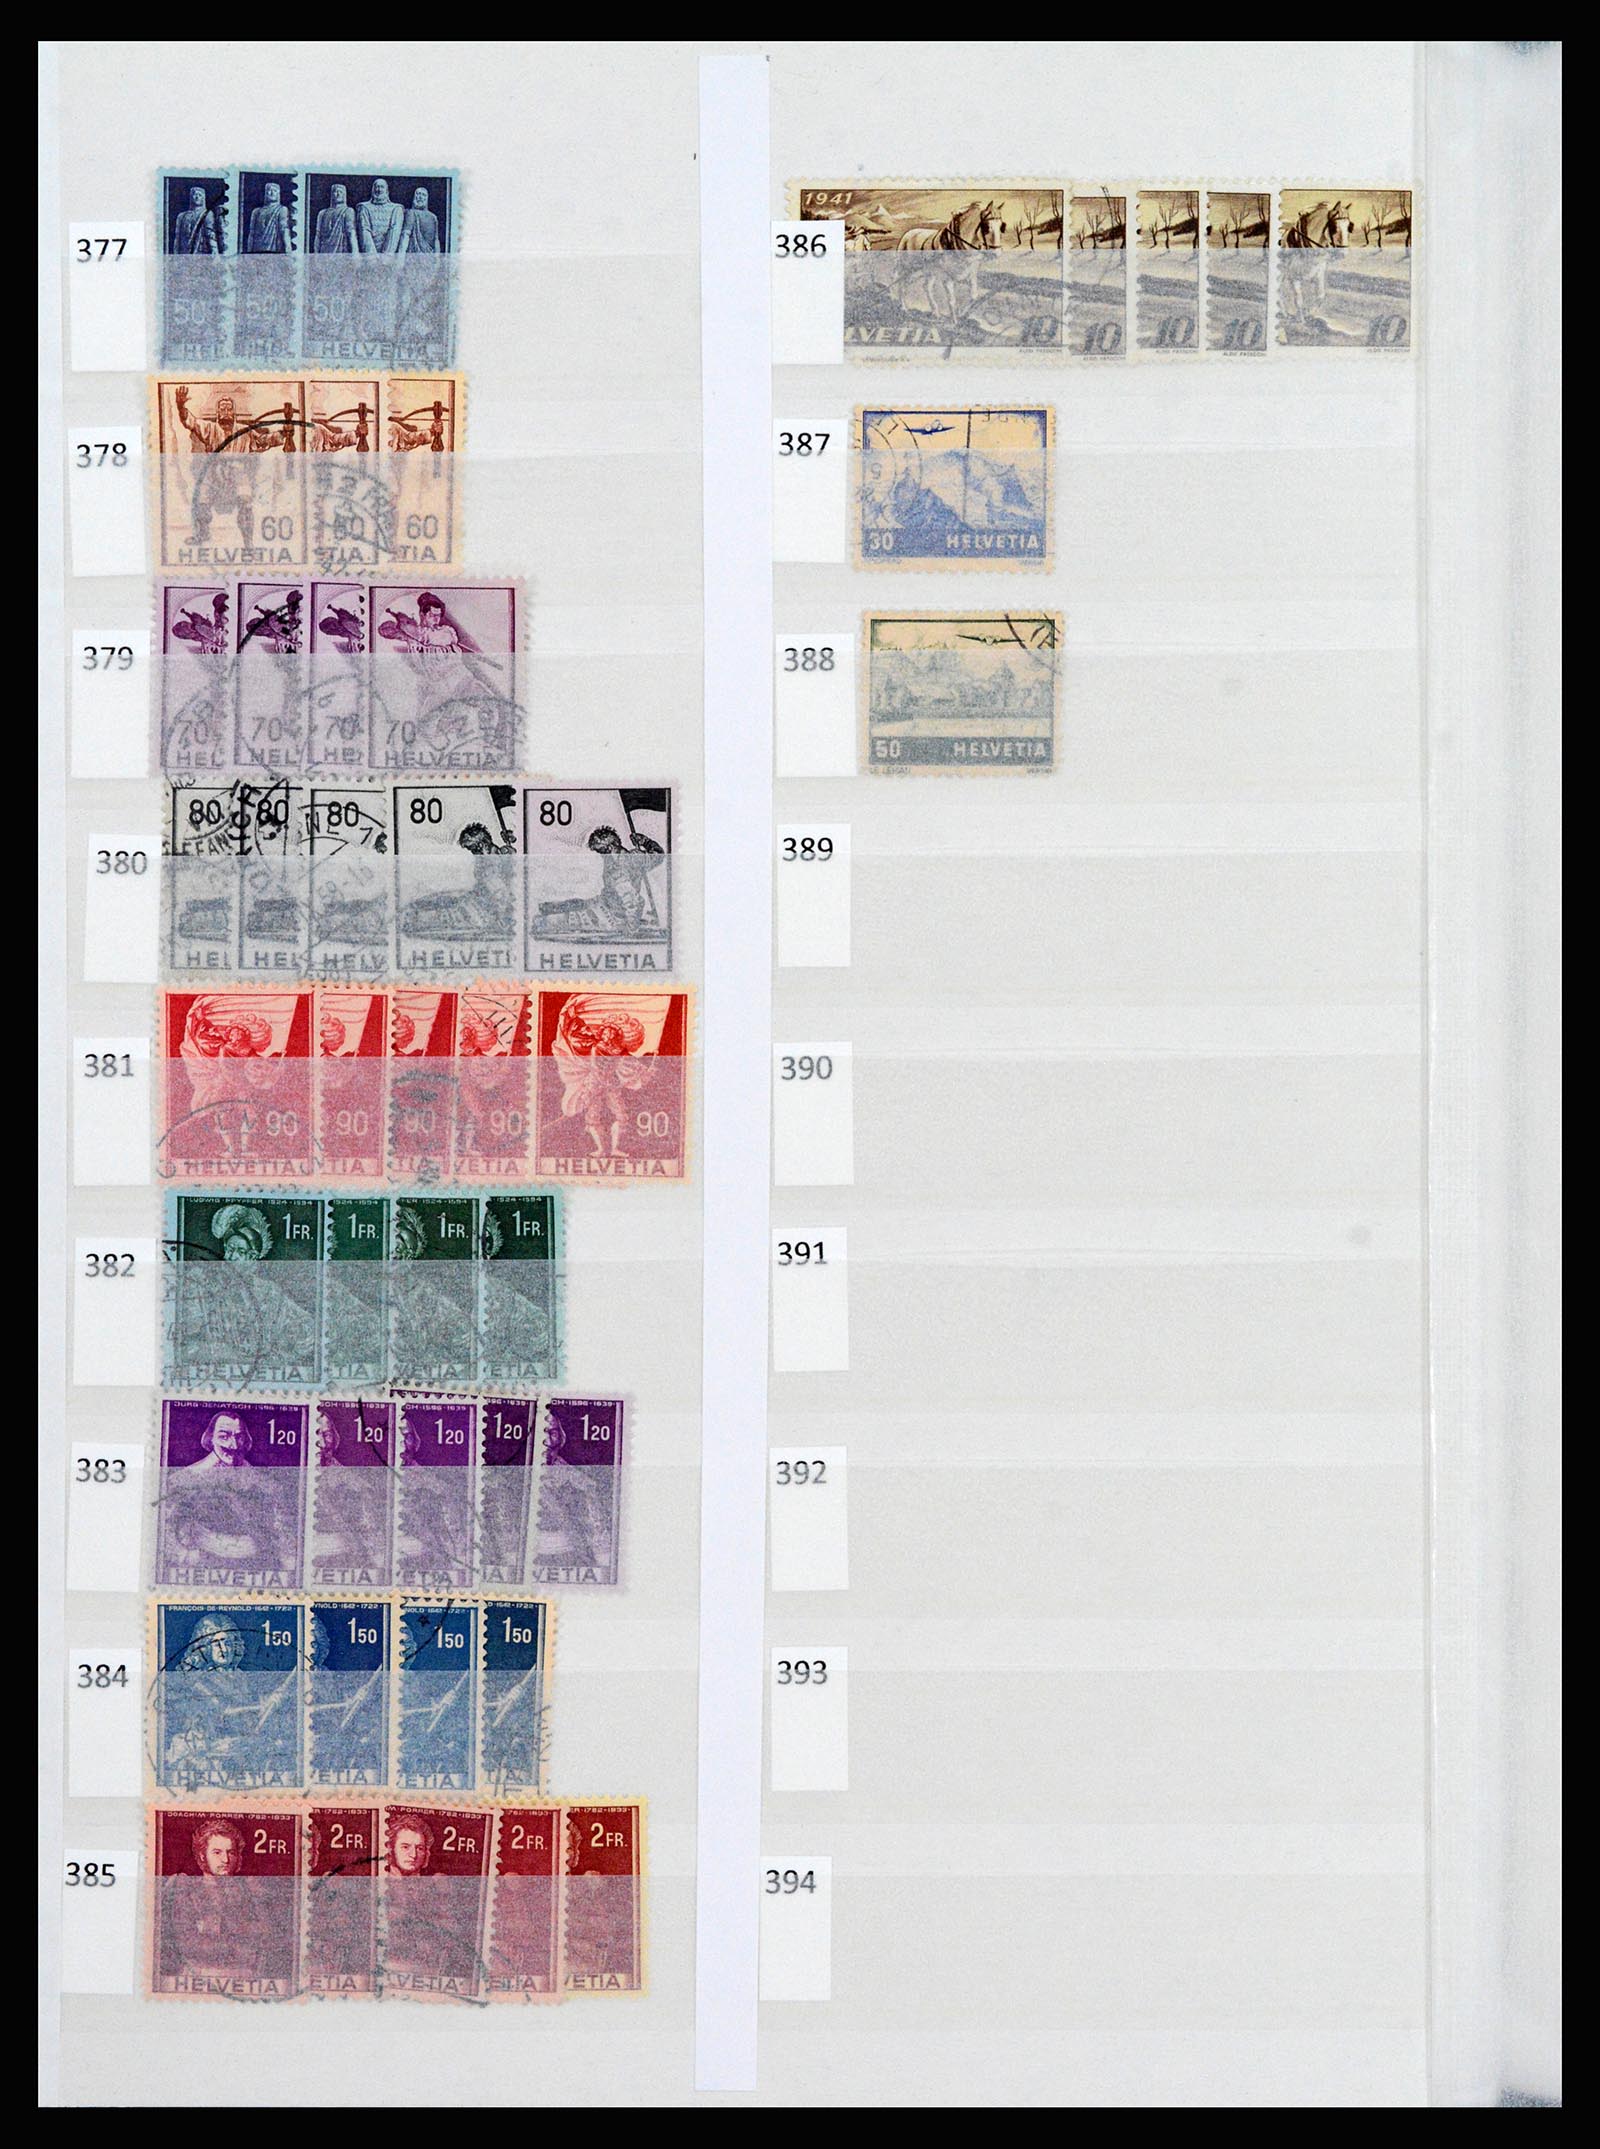 37252 018 - Stamp collection 37252 Switzerland 1900-2011.